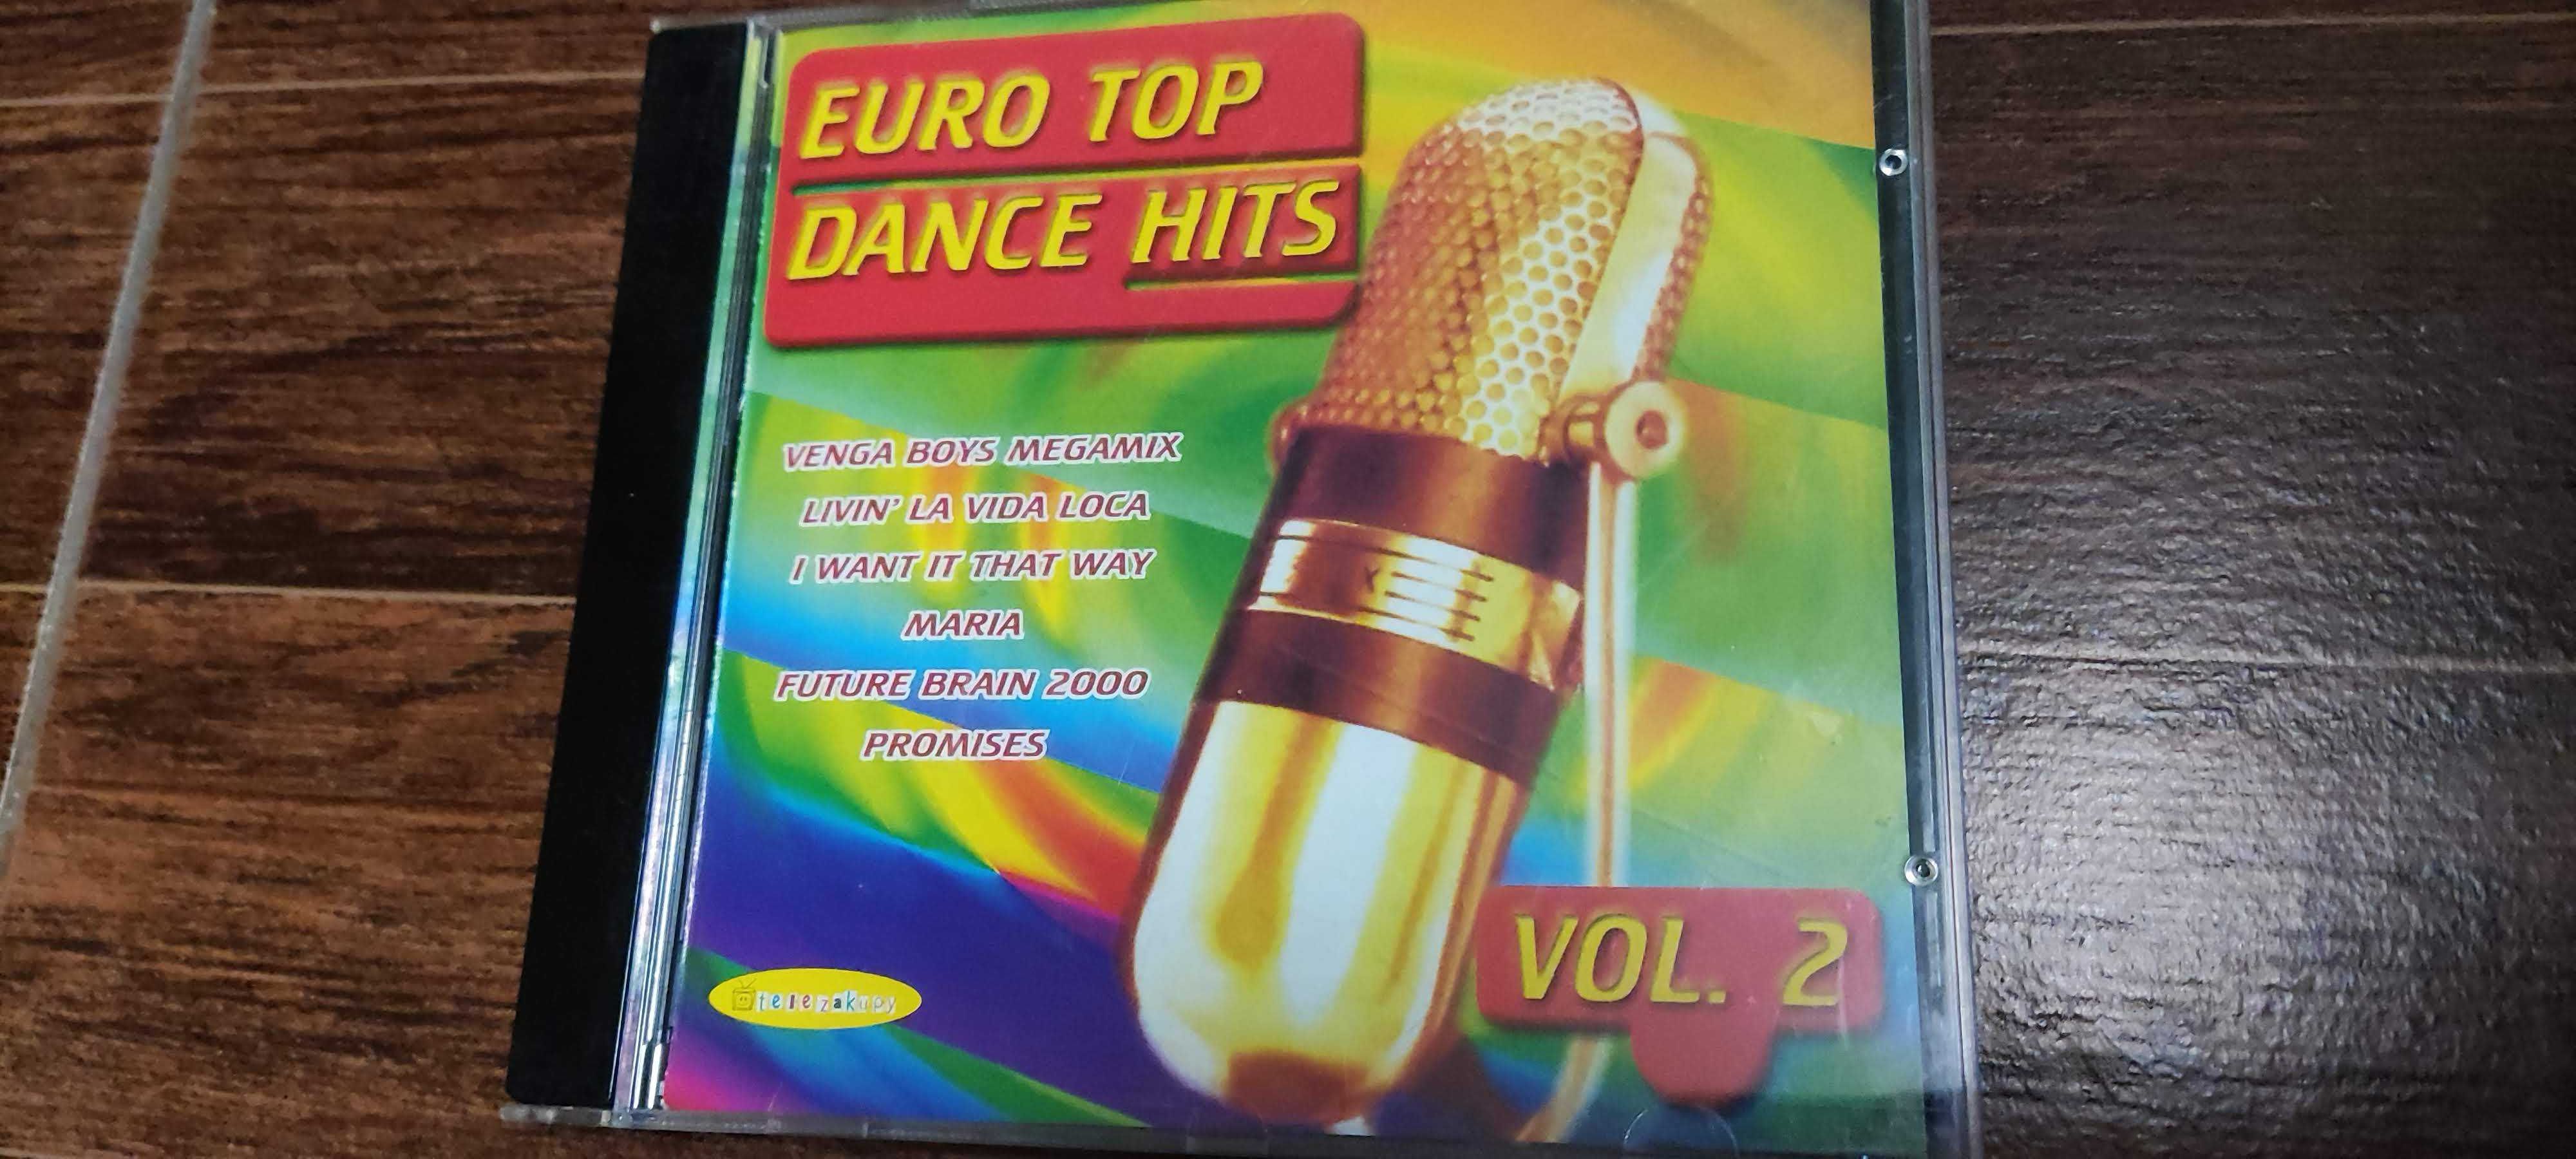 Euro Top Dance Hits Vol. 2 1999 fun music